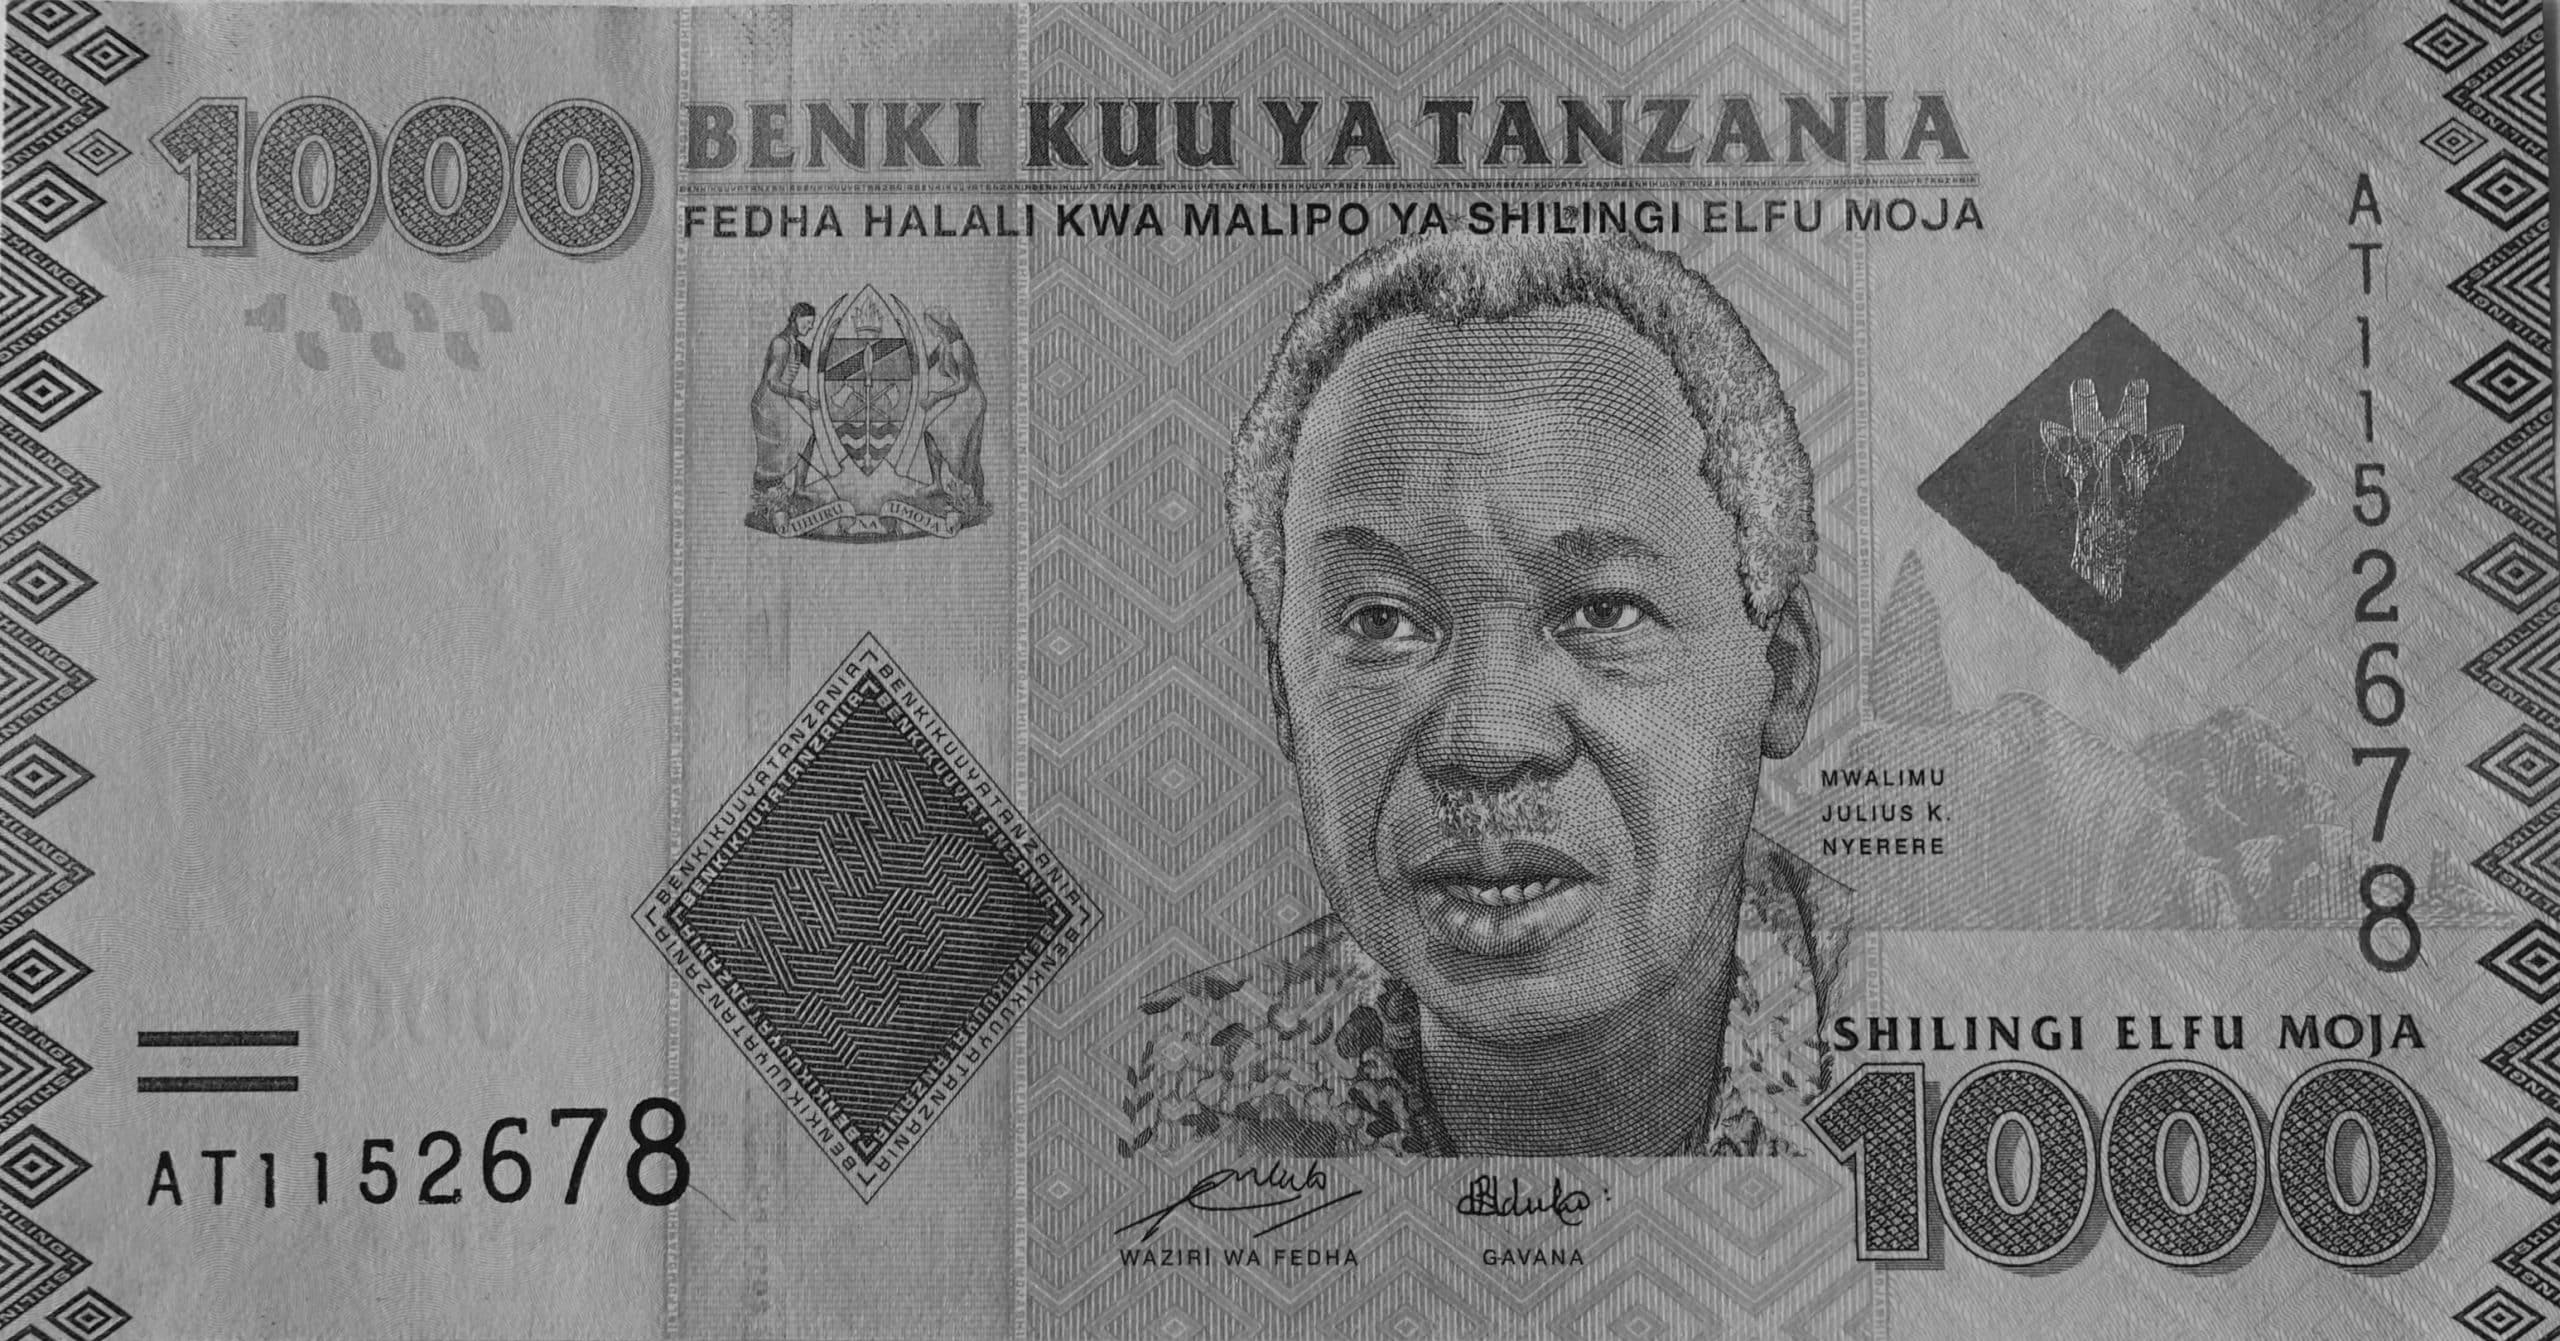 1000 Tanzania Shilling Front